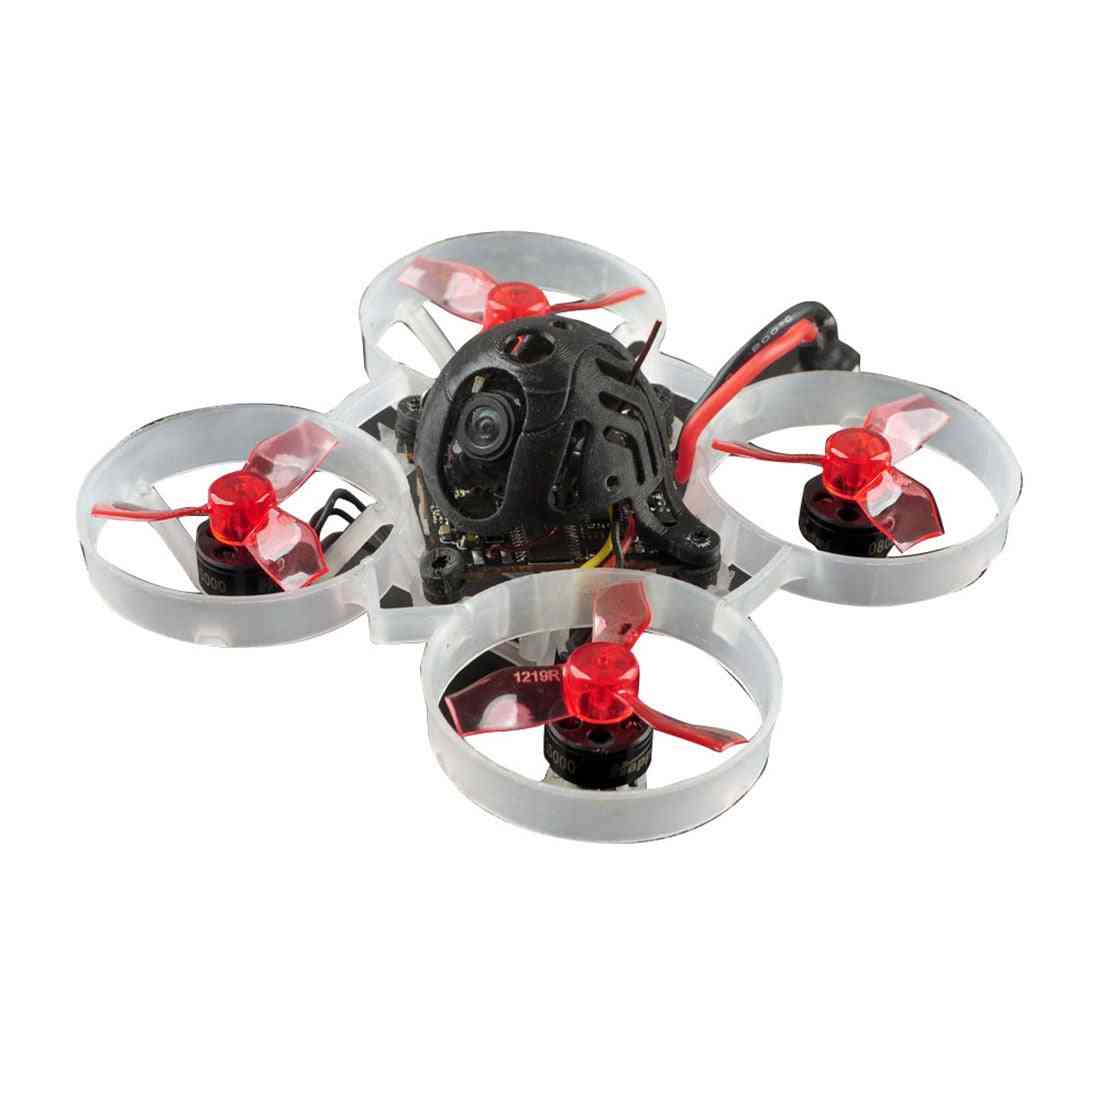 Dron de carreras con 4 en 1 - fácil de usar - 19000kv para frsky